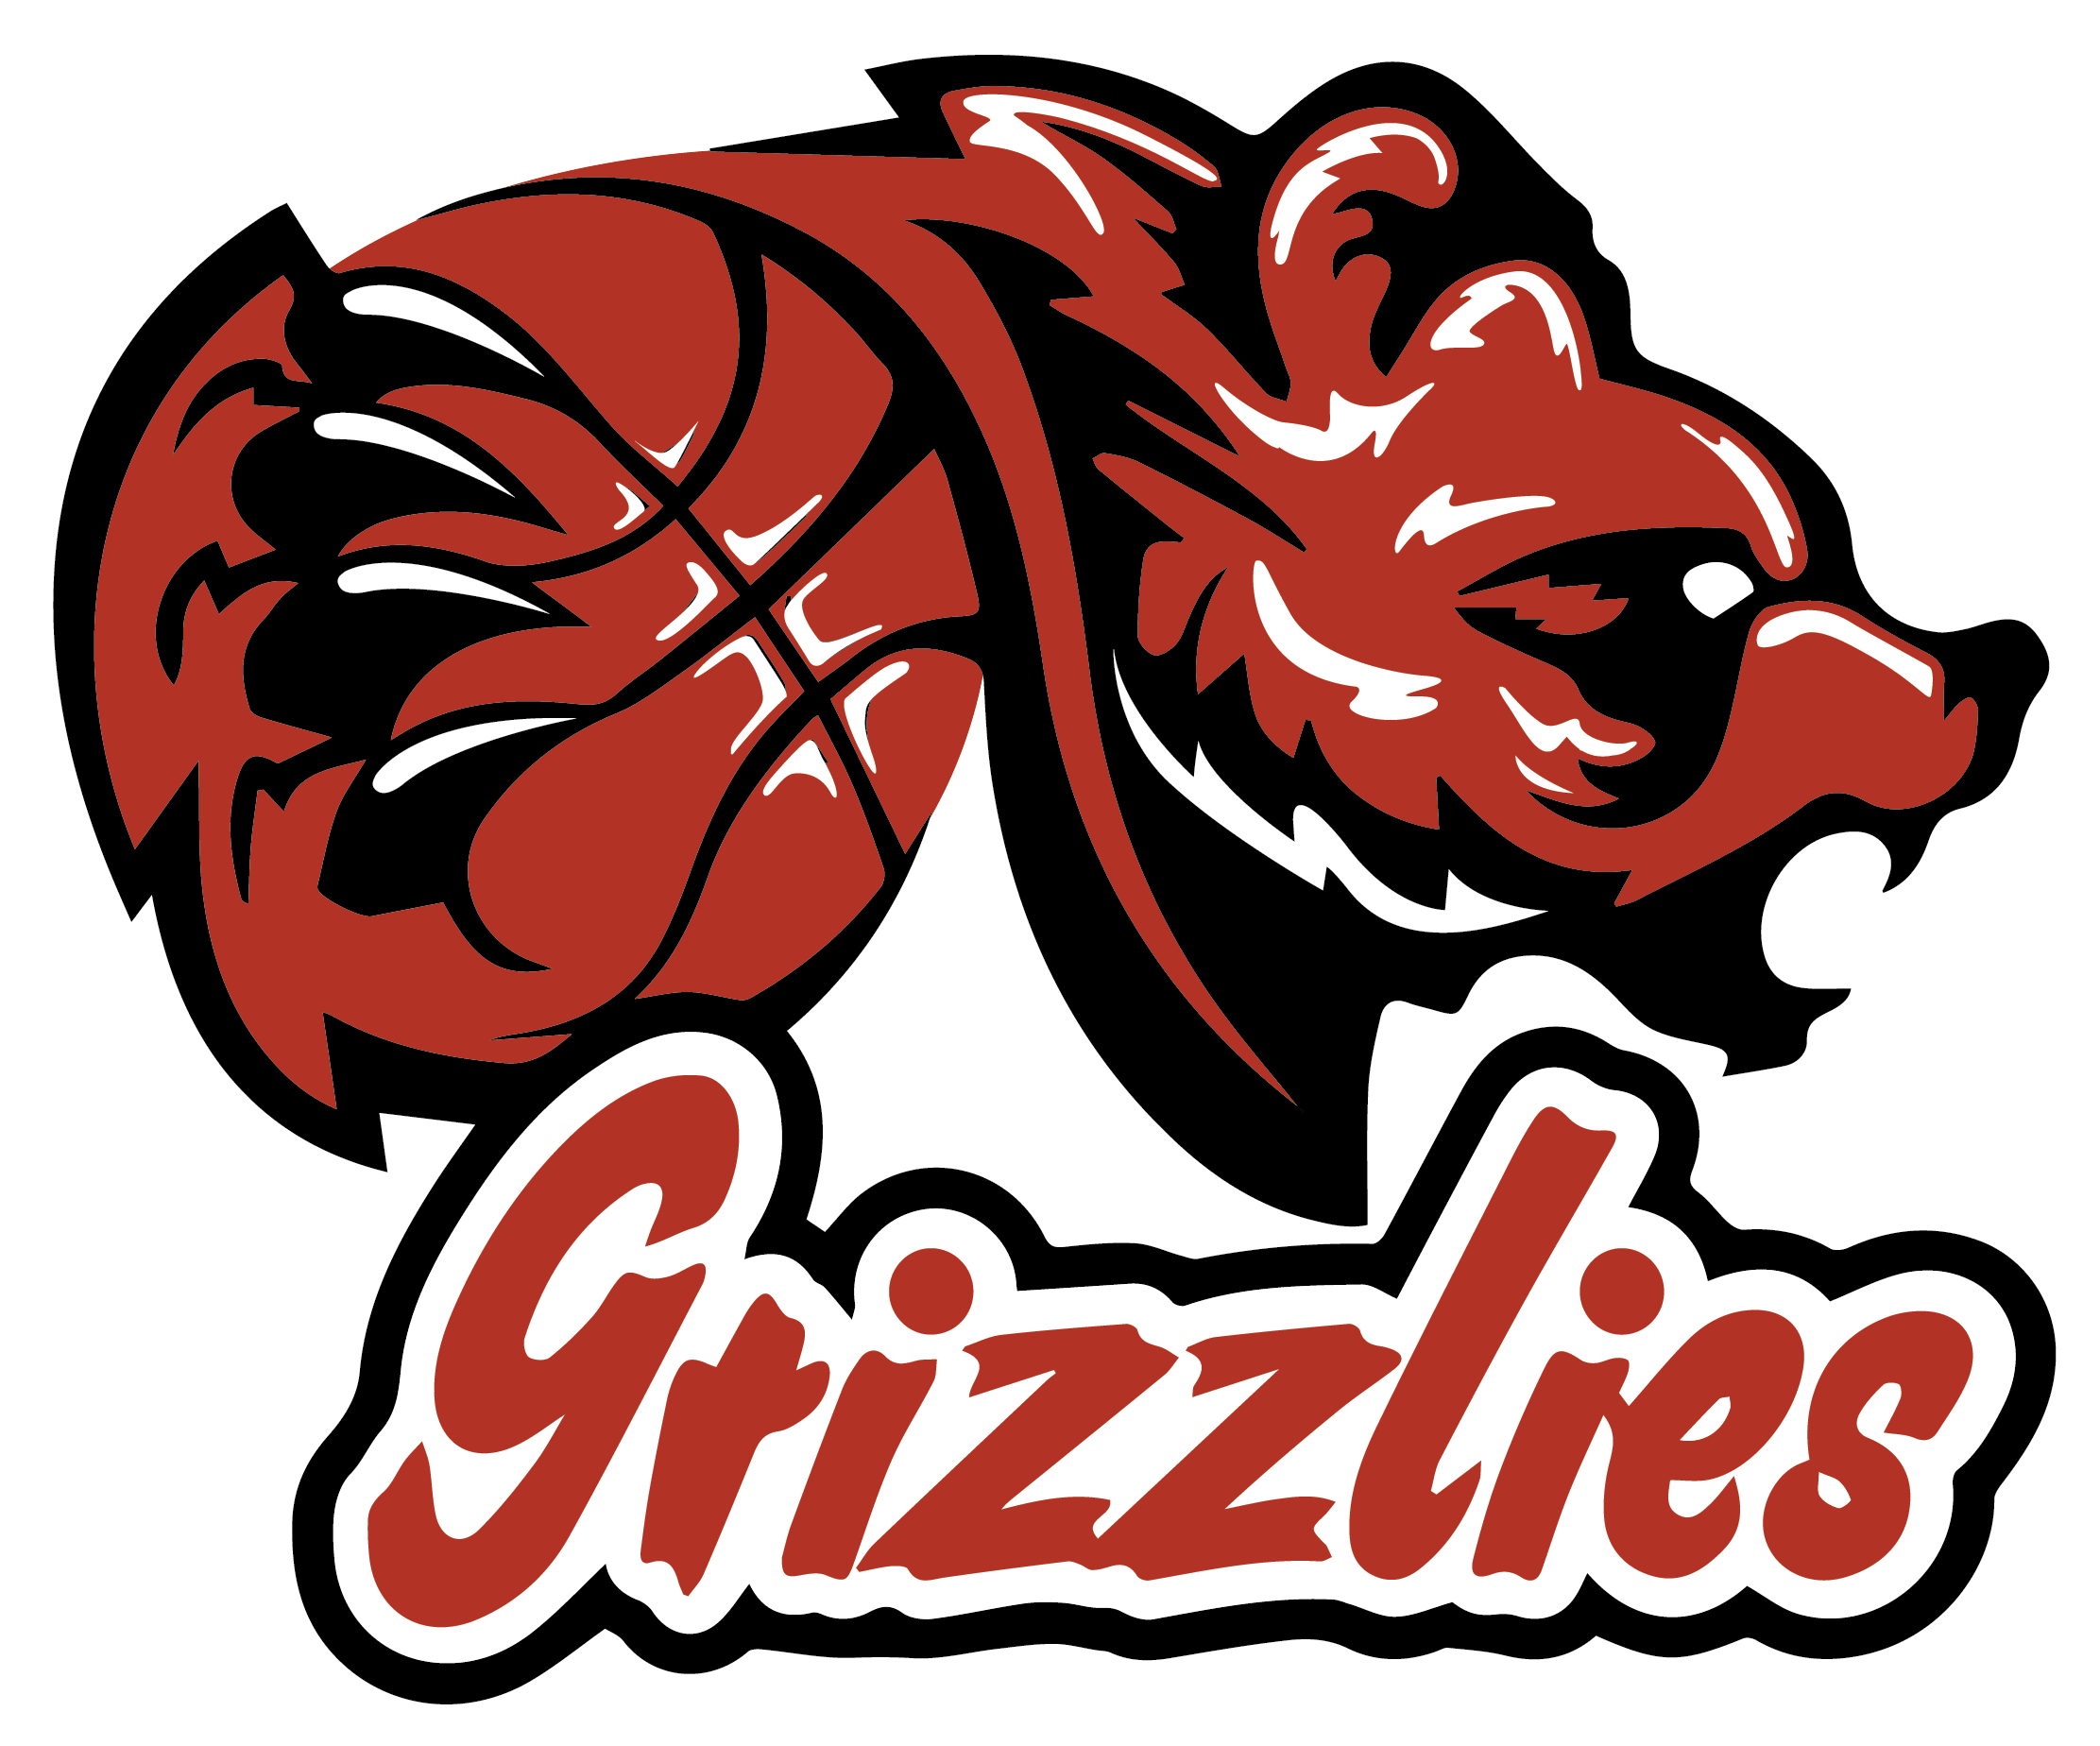 Grizzlies Logo PNG